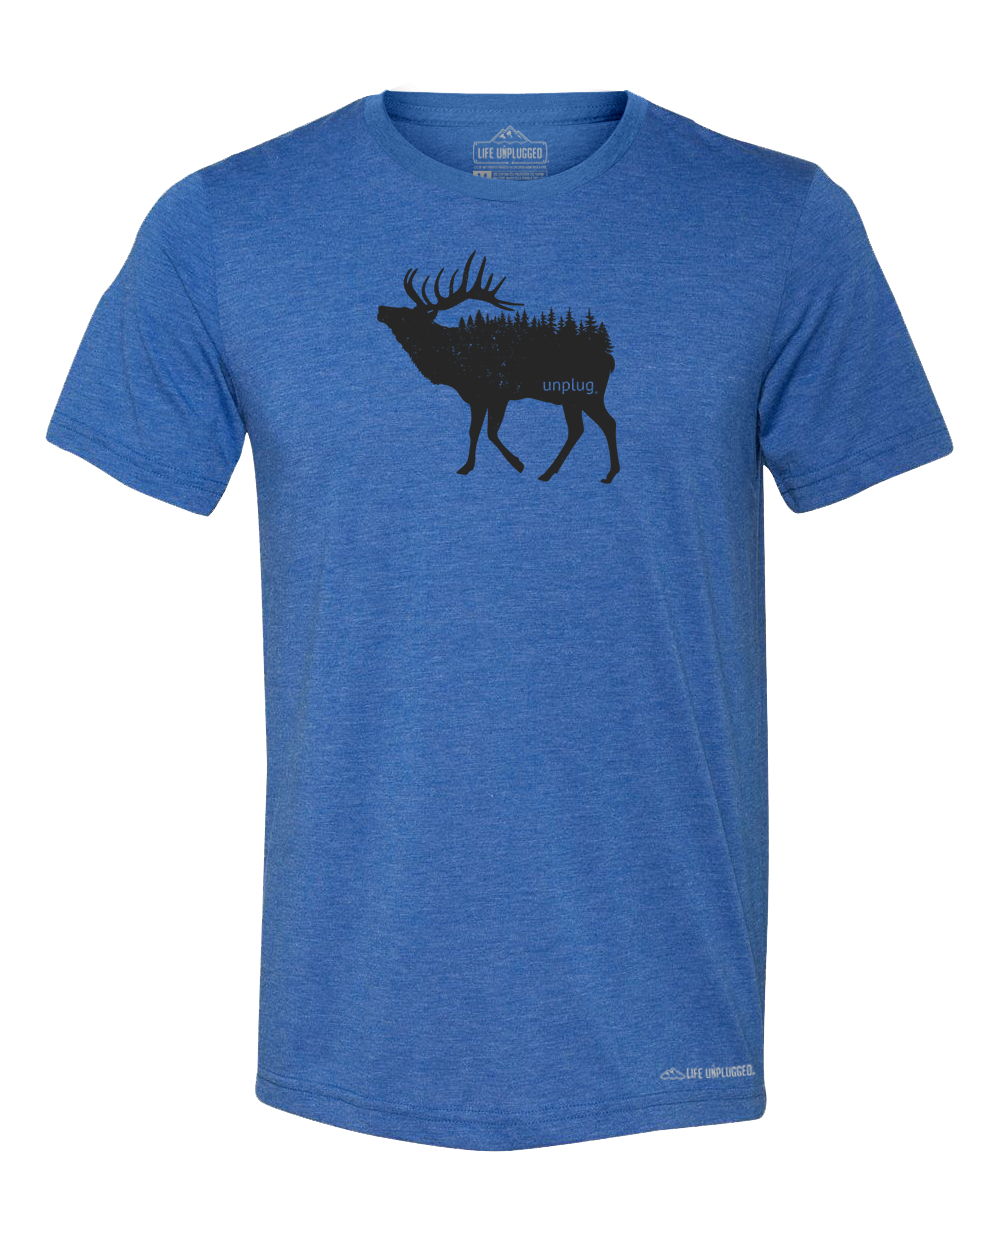 Elk In The Trees Premium Triblend T-Shirt